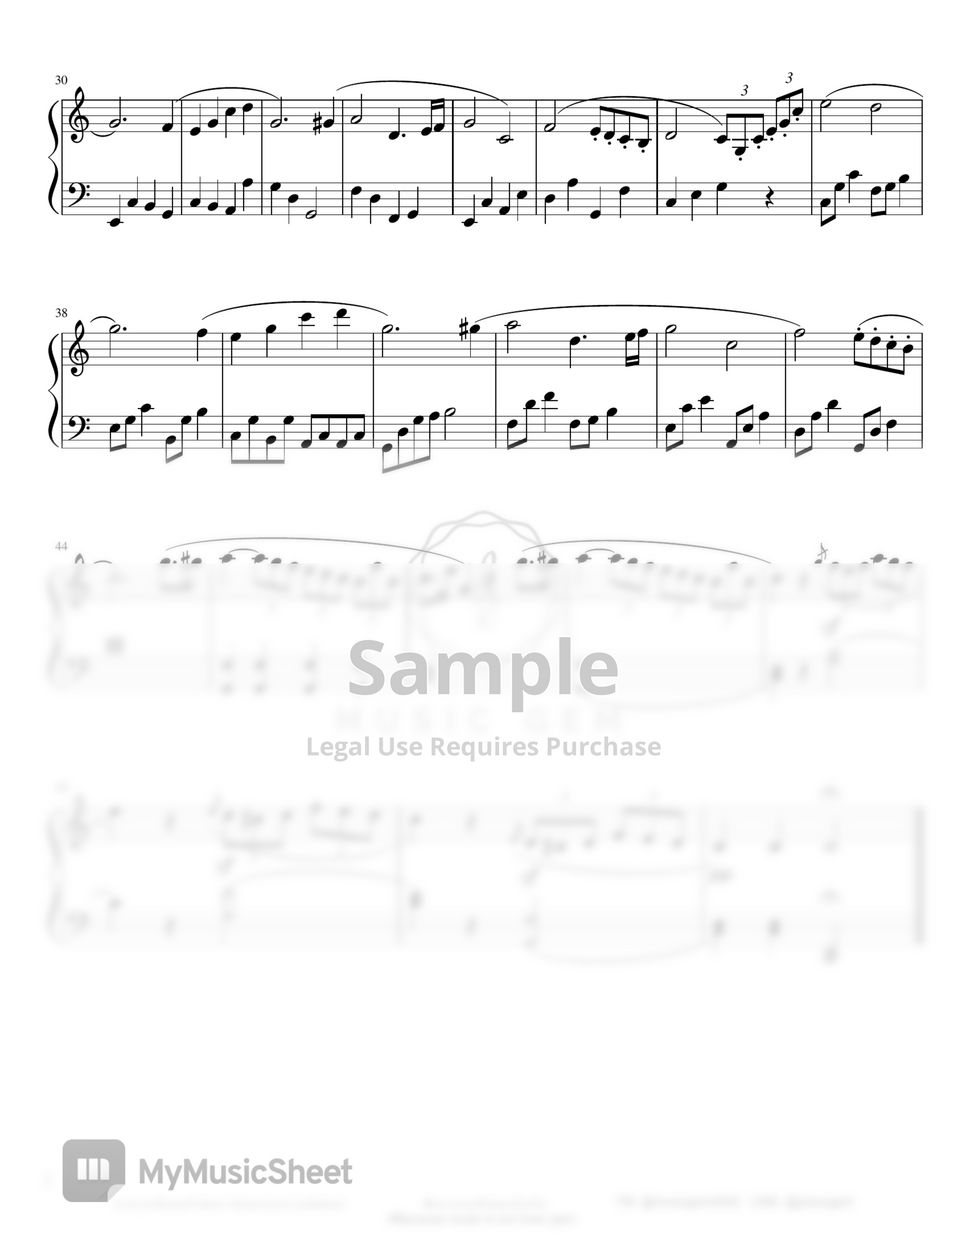 Jóga - Solo Piano Sheet music for Piano (Solo) Easy